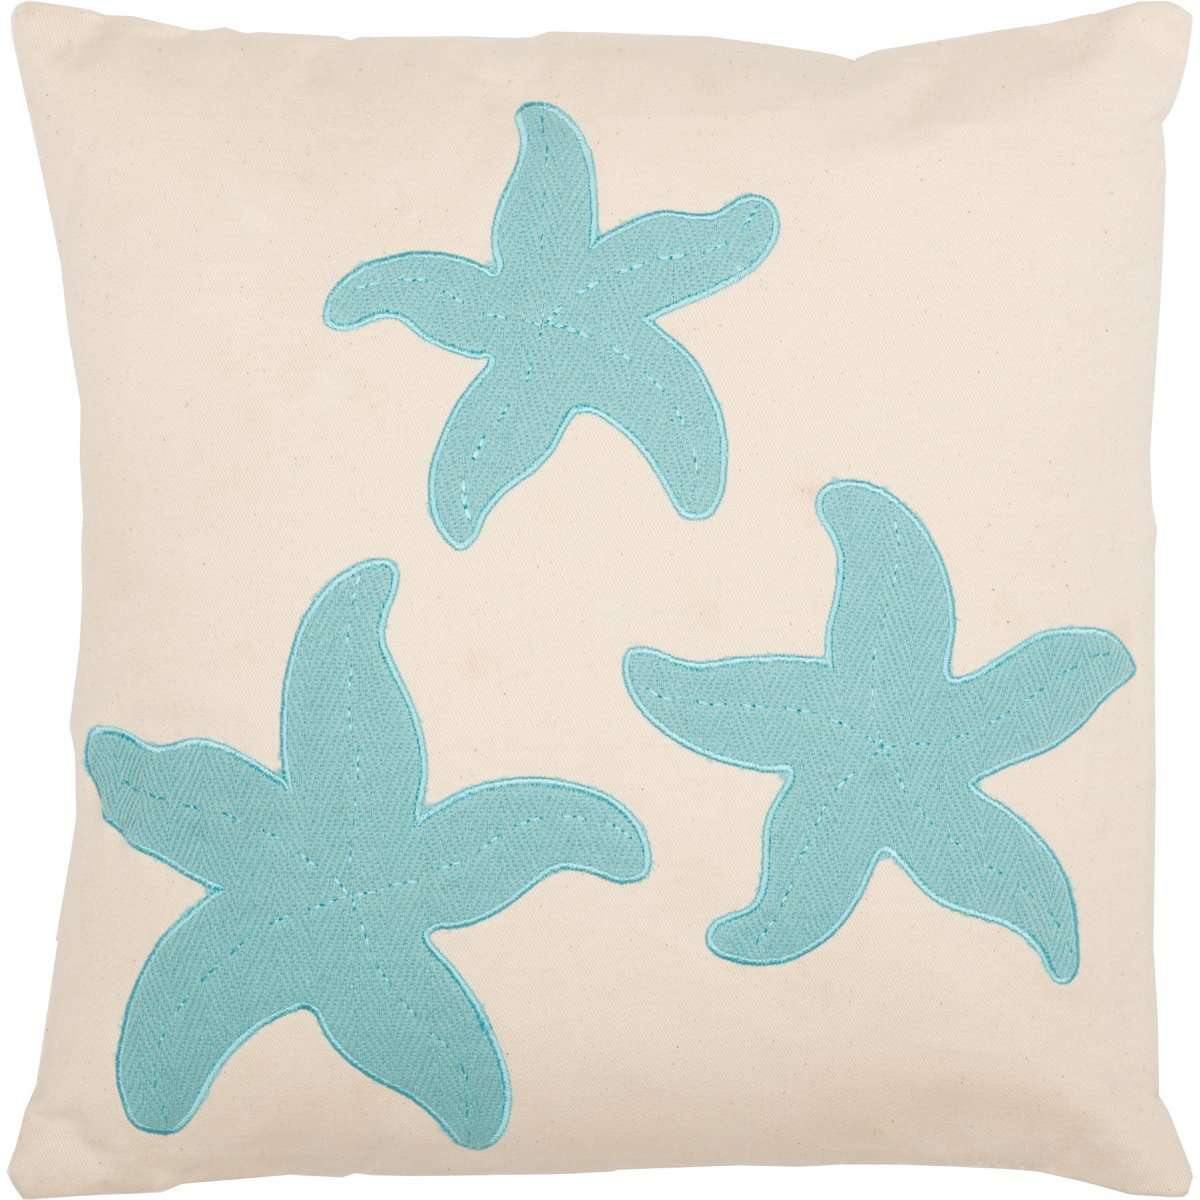 Three Starfish Pillow 18x18 - The Fox Decor